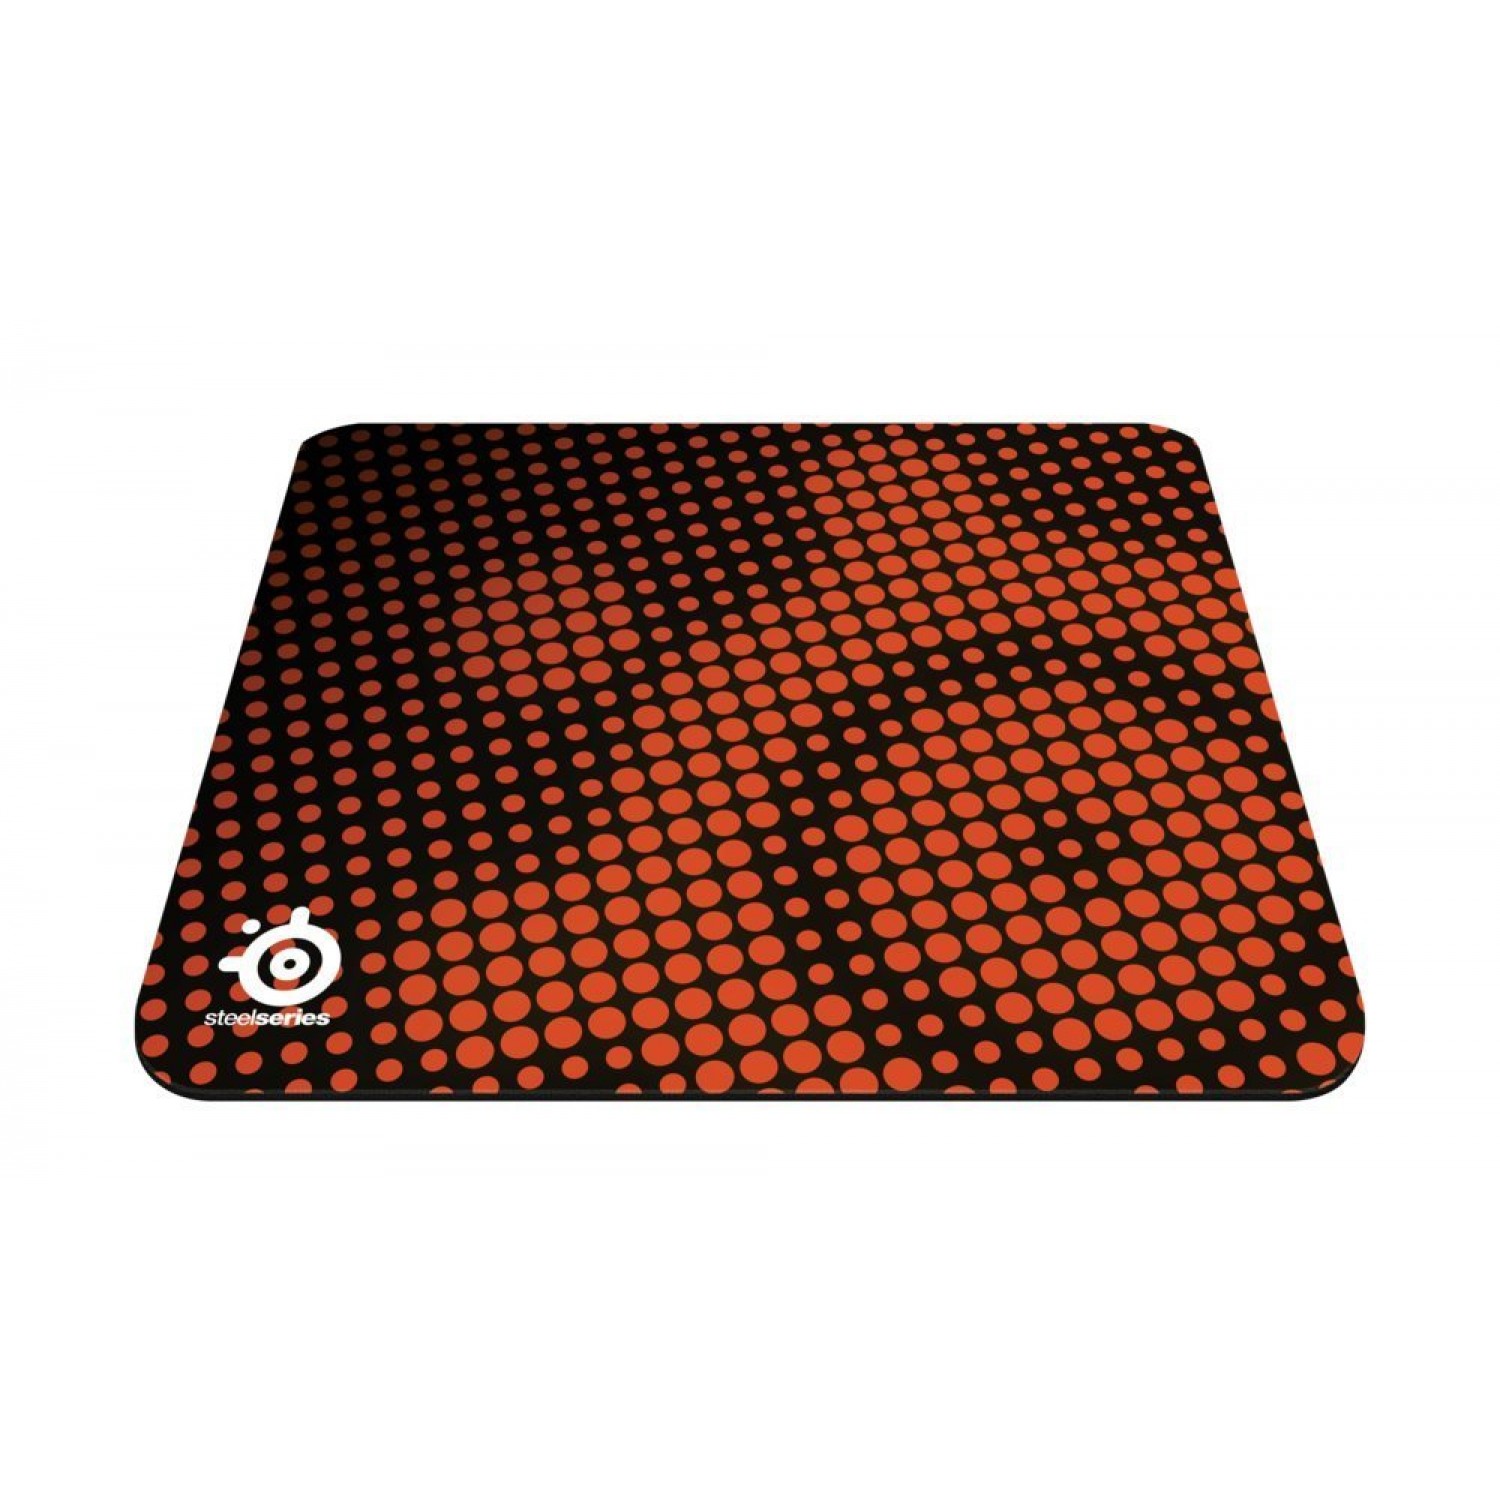 Steelseries Qck Heat Orange Mouse pad-2